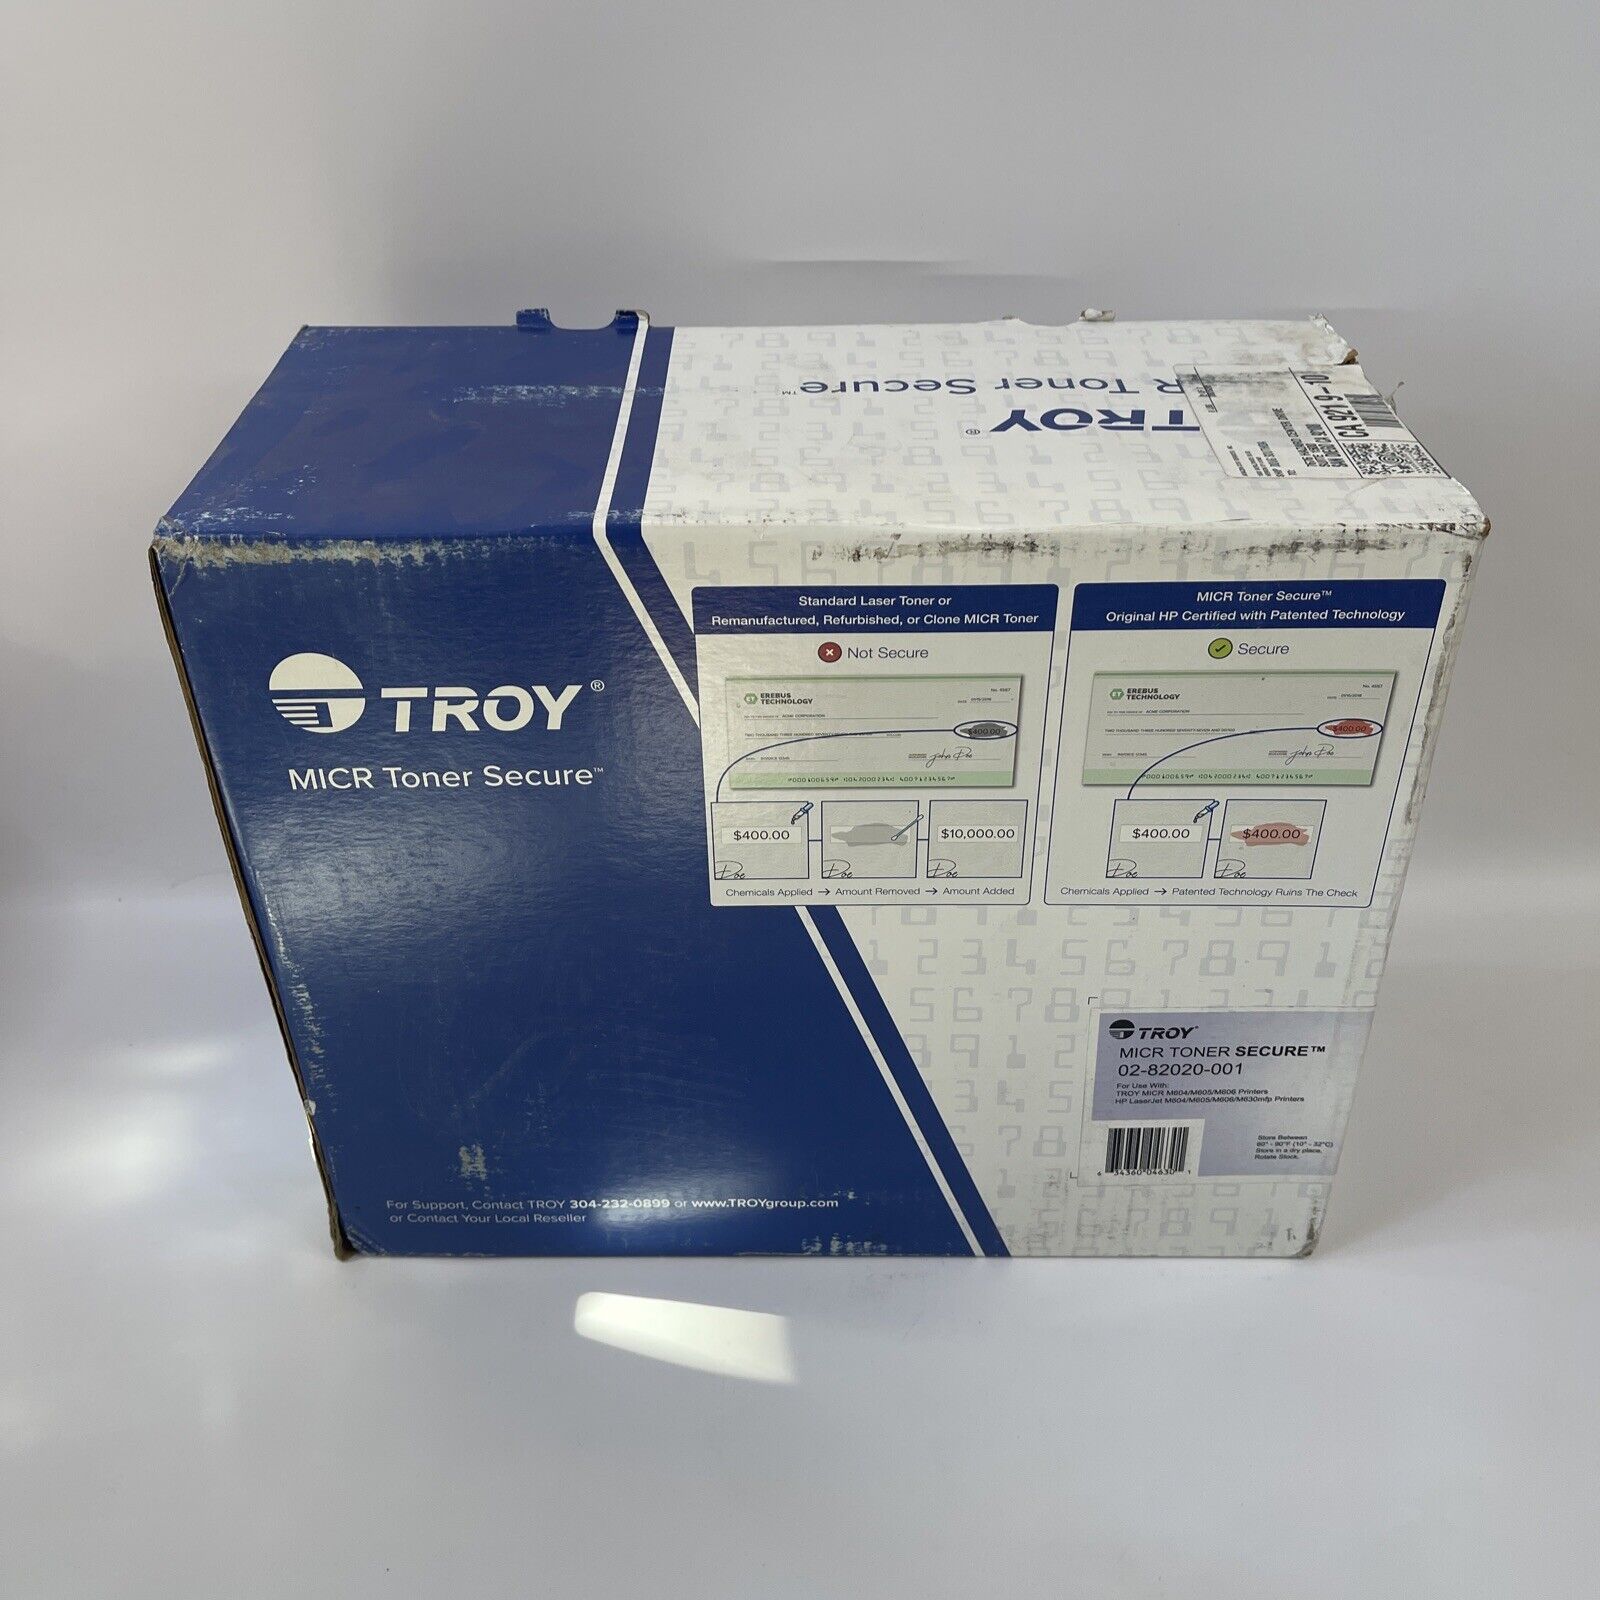 Troy M604/M605/M606/M630 Micr Toner Secure Cartridge 02-82020-001